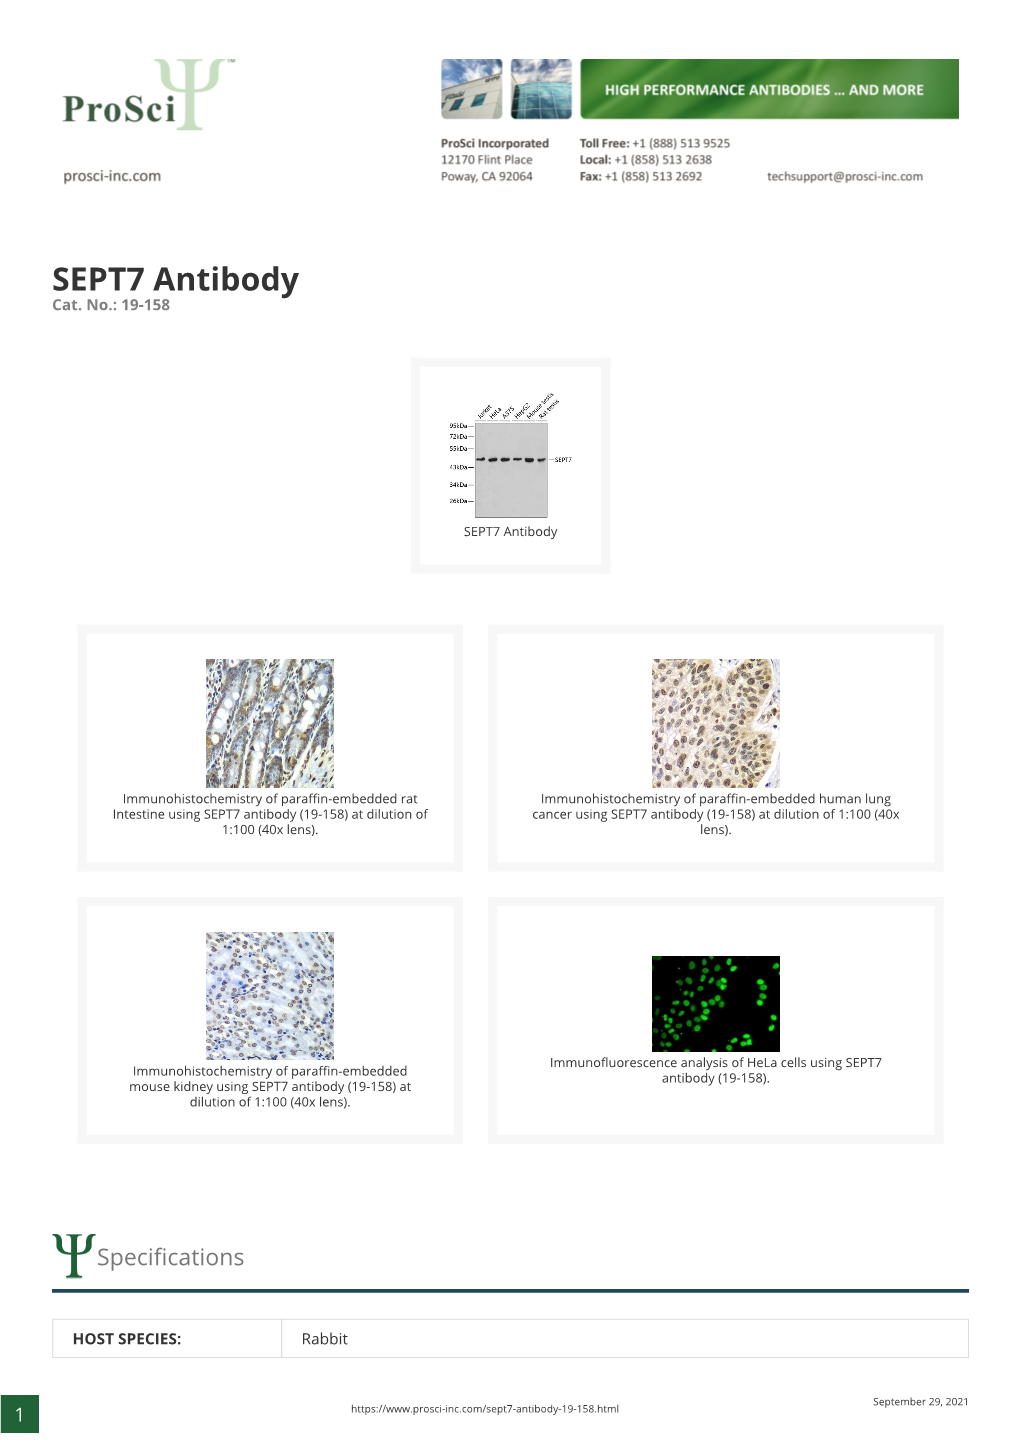 SEPT7 Antibody Cat